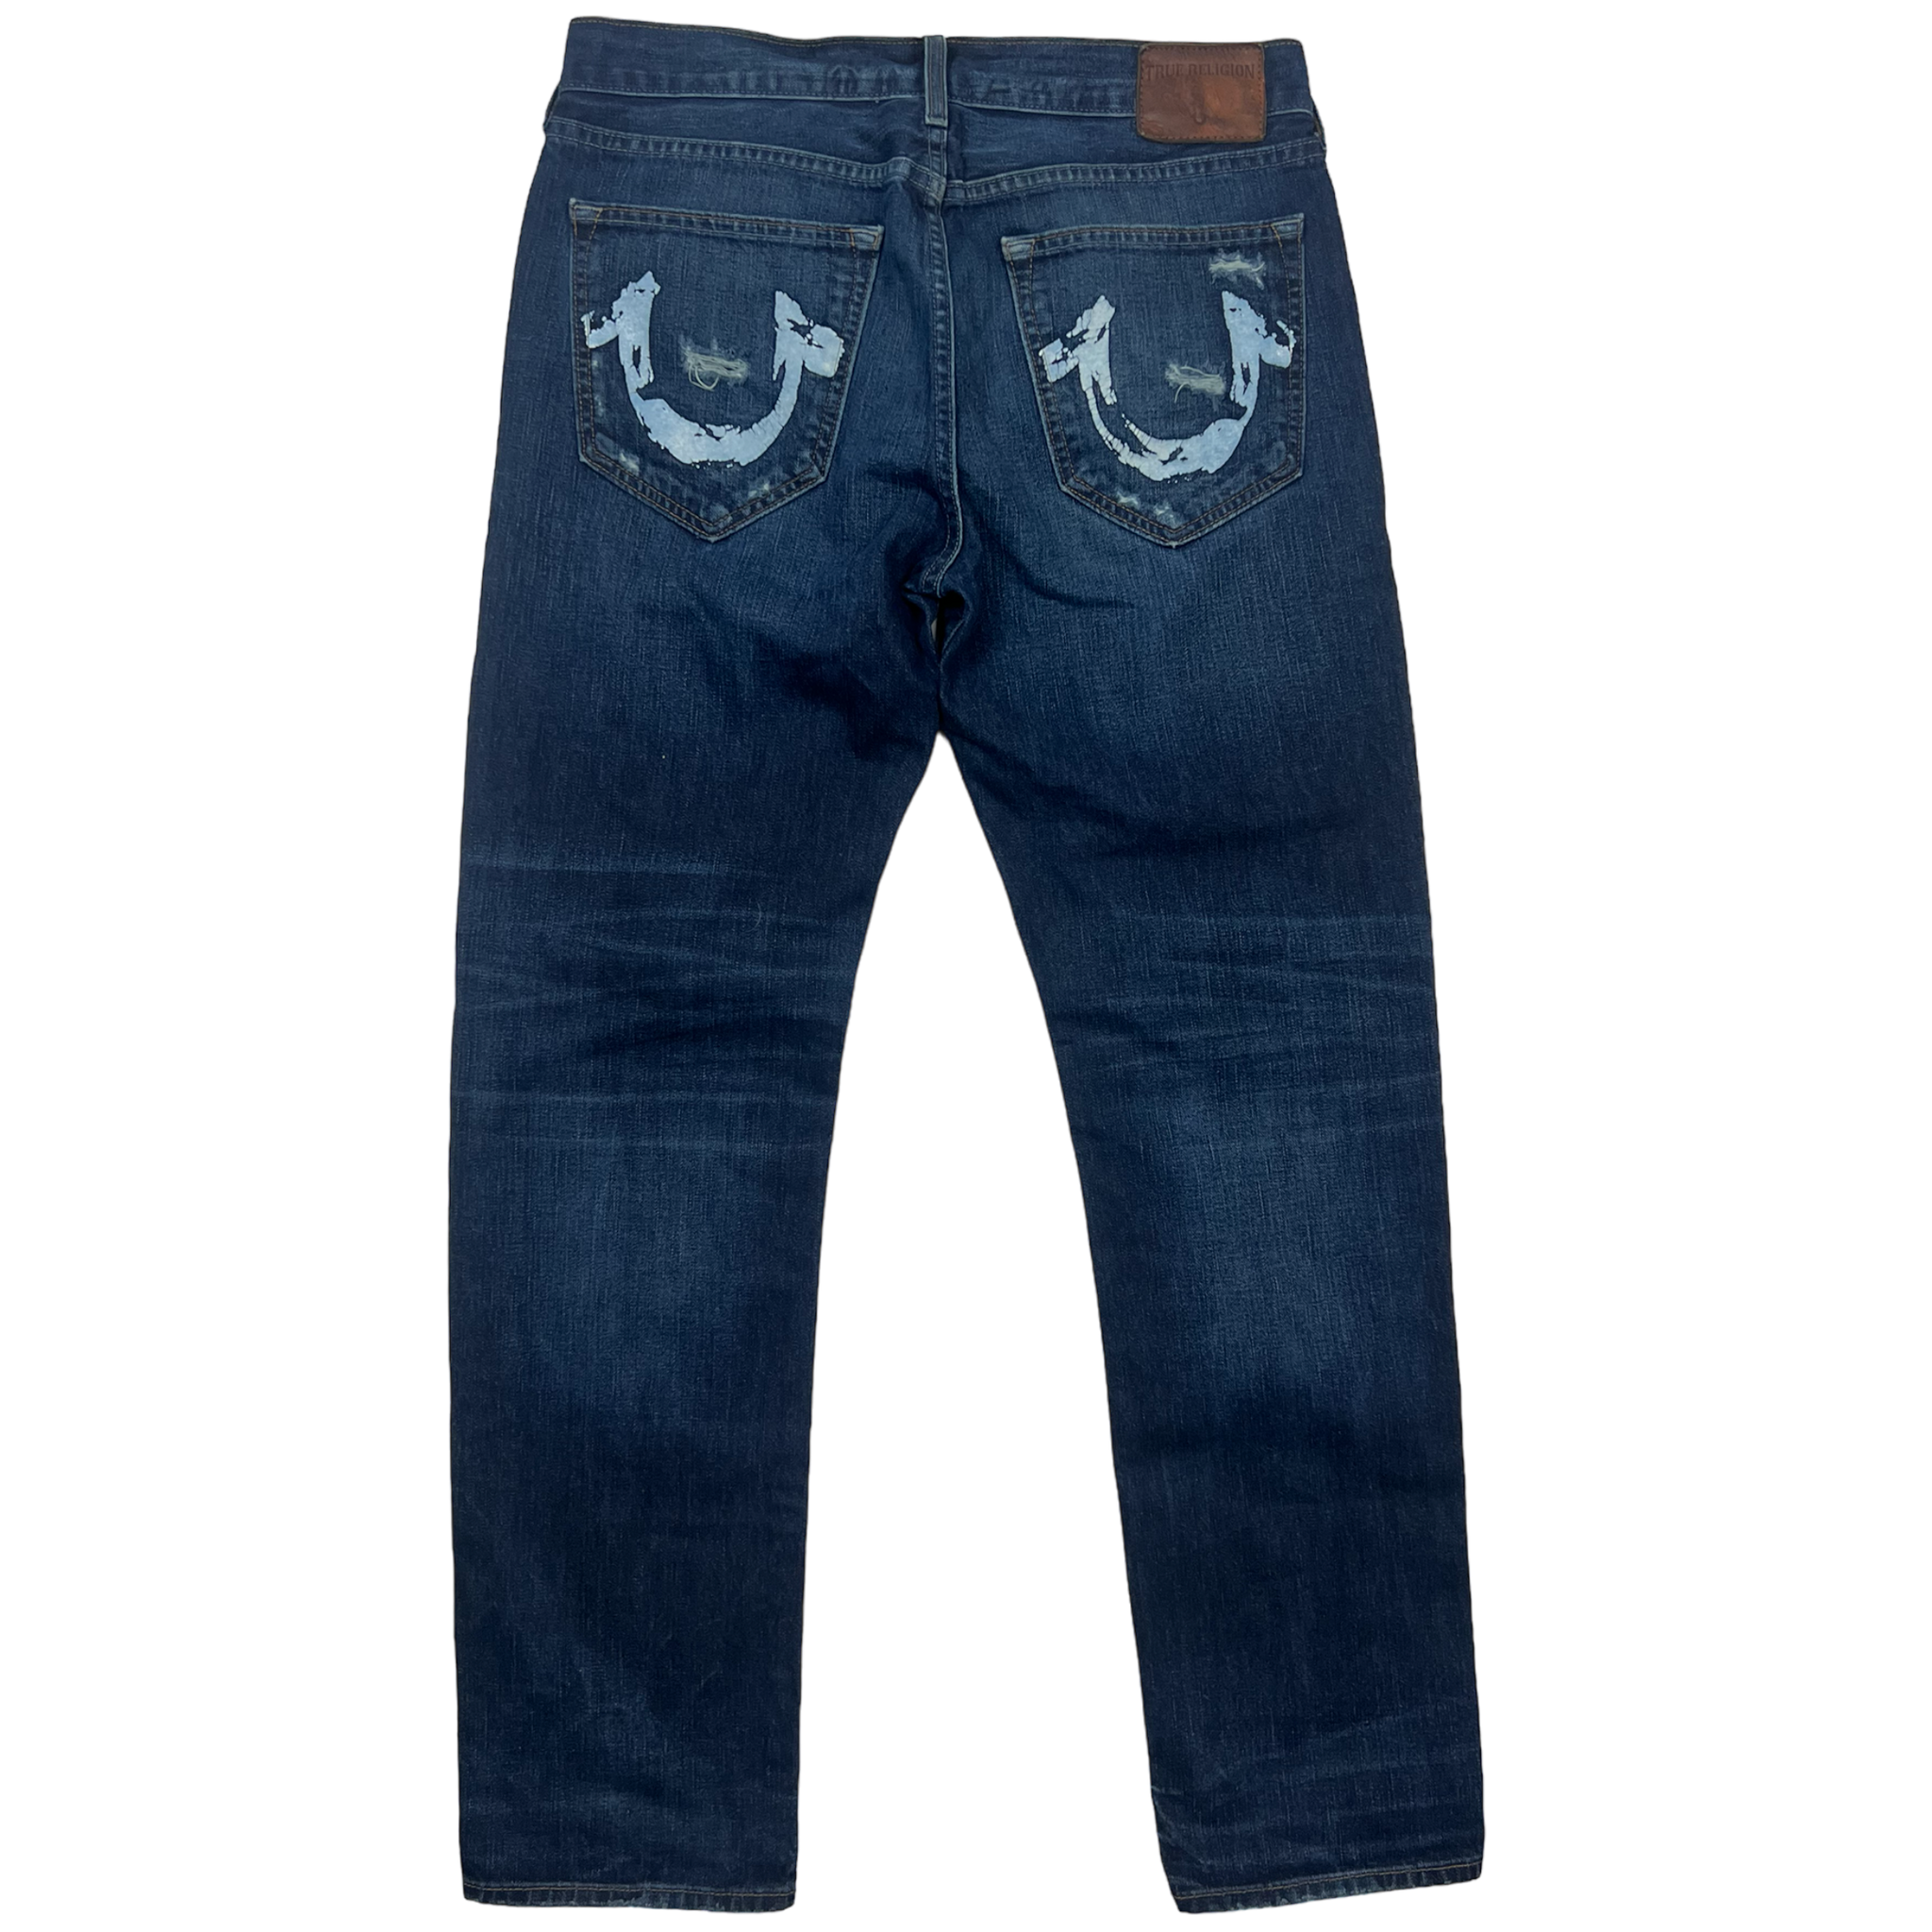 True Religions Jeans (34)